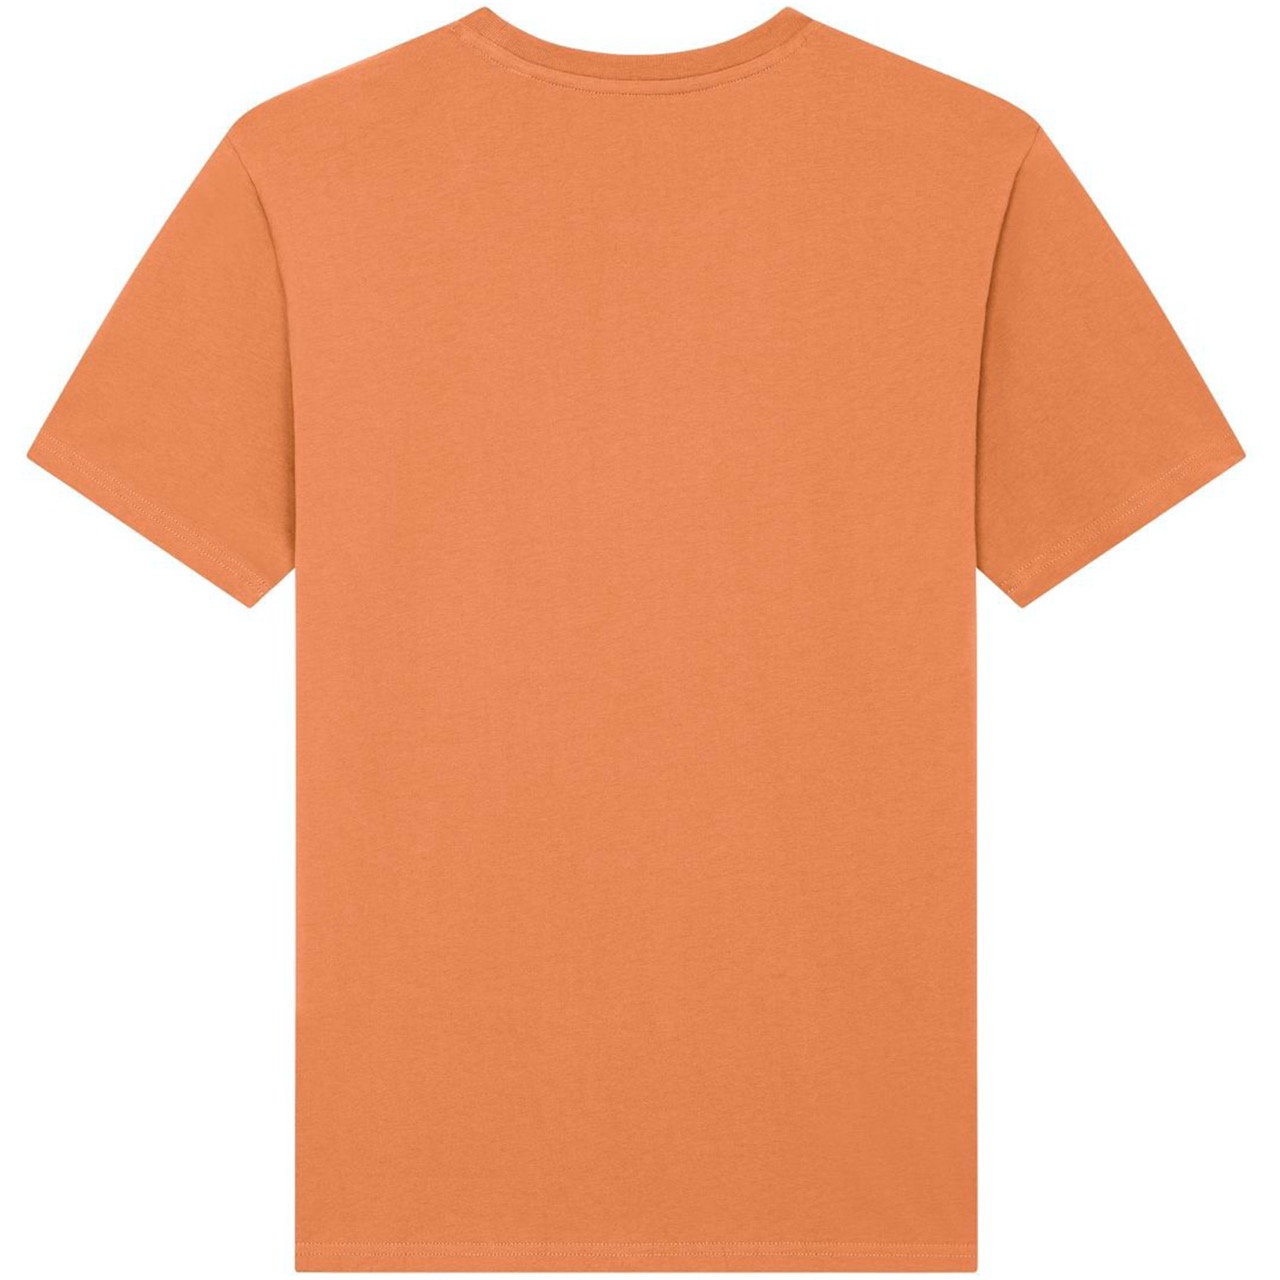 Camiseta naranja manga corta algodón ogánico - Holocene Classics Espalda